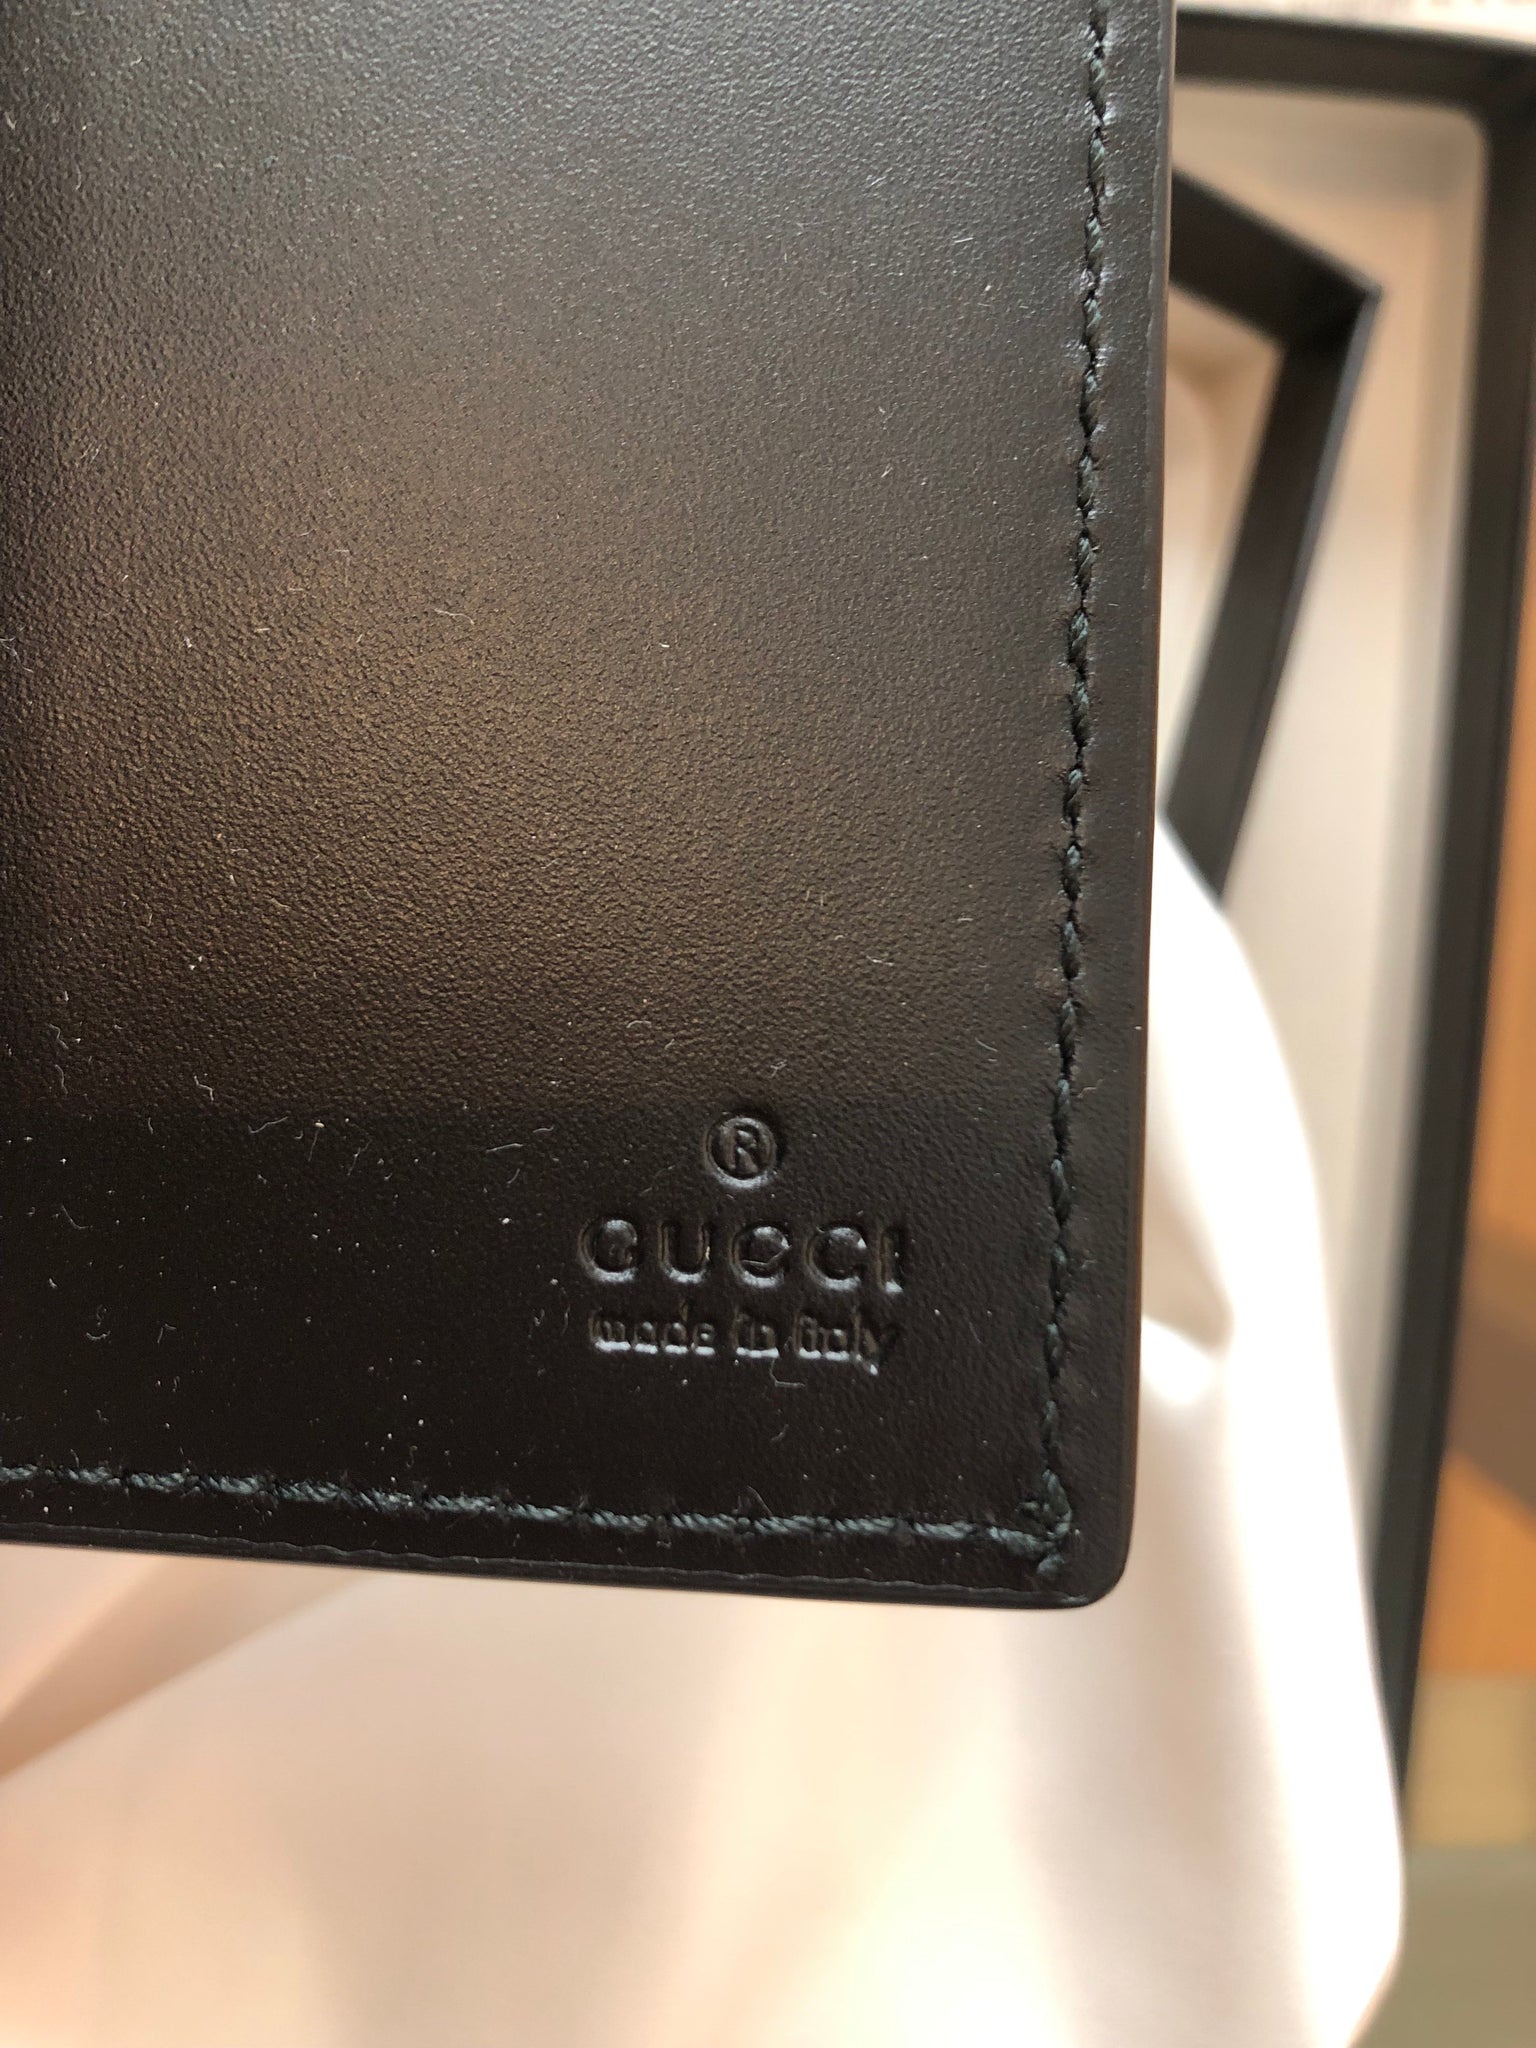 GG Embossed Passport Holder in Black - Gucci